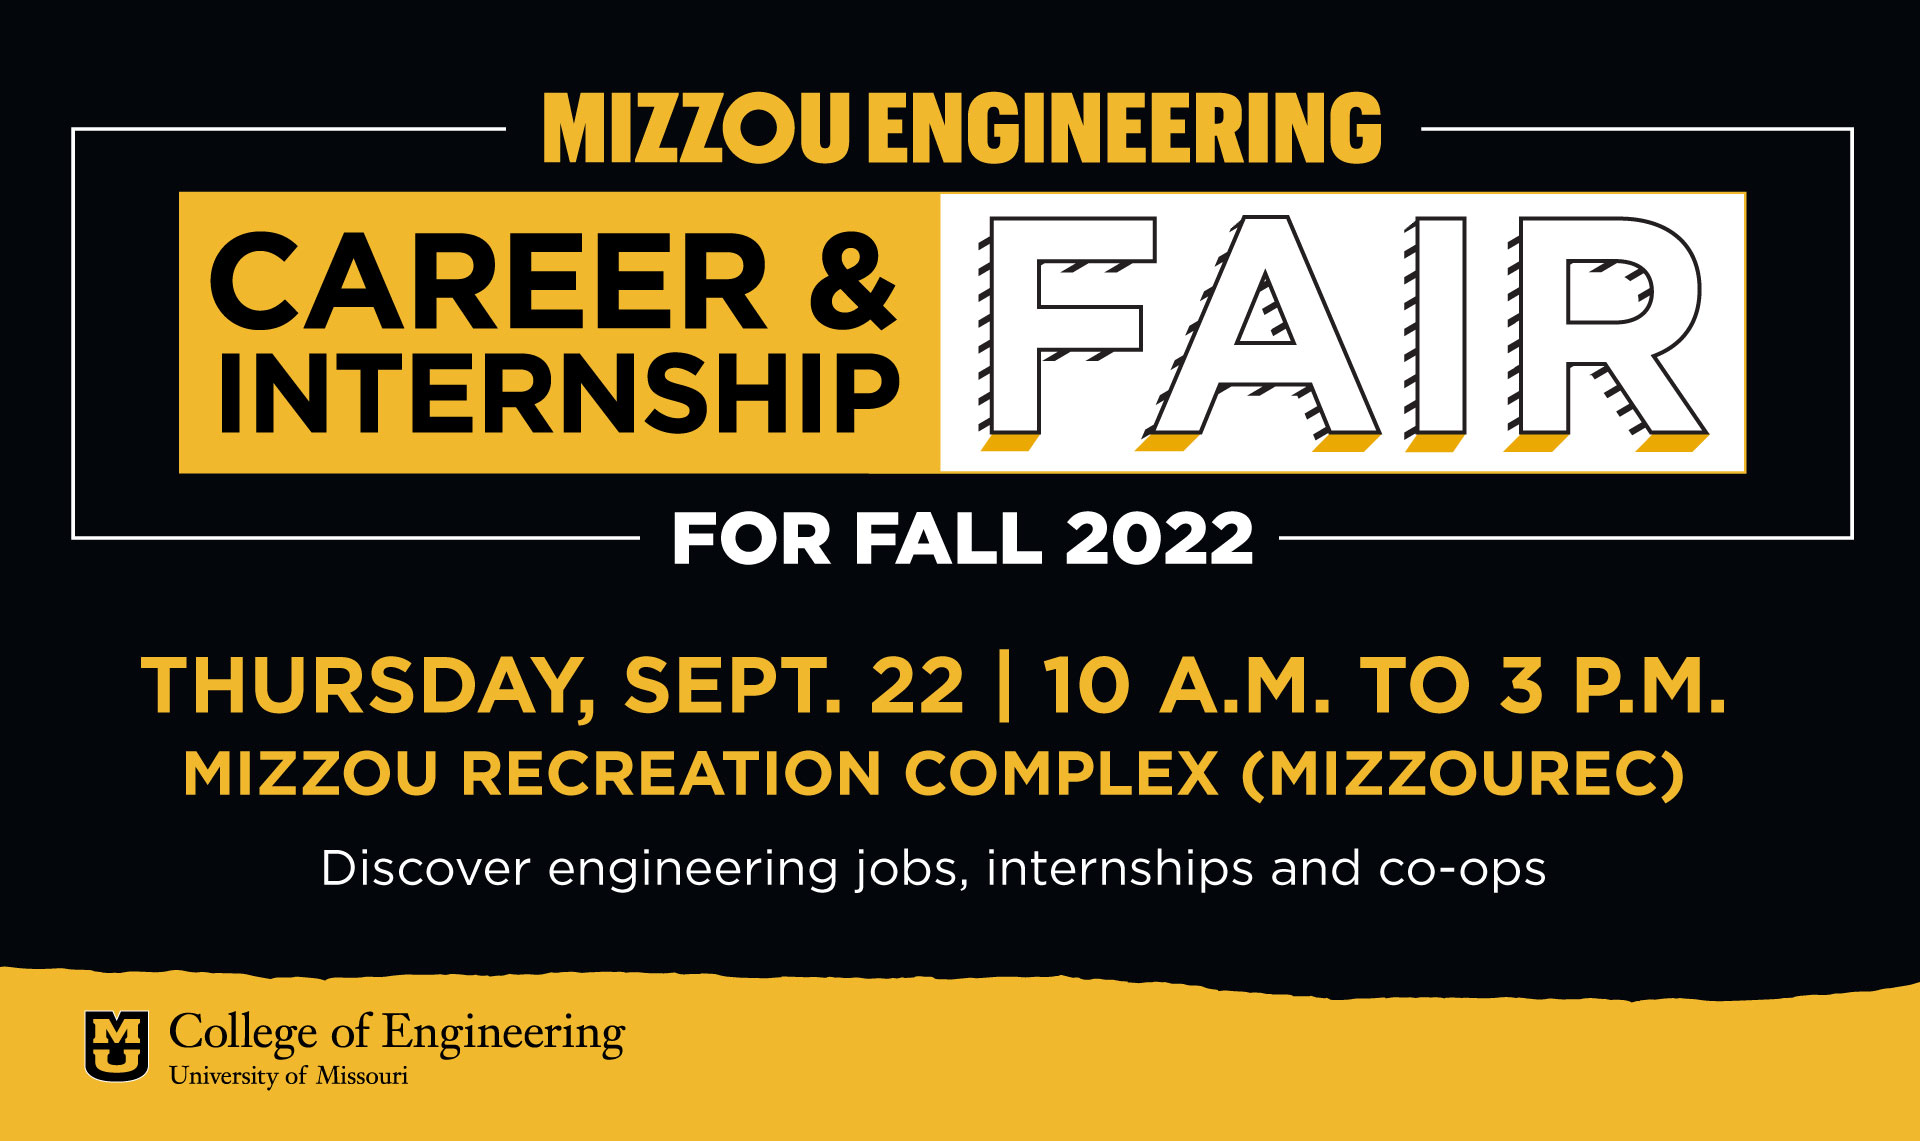 Career & Internship Fair Thursday, Sept. 22, 10 a.m. to 3 p.m. at MizzouRec